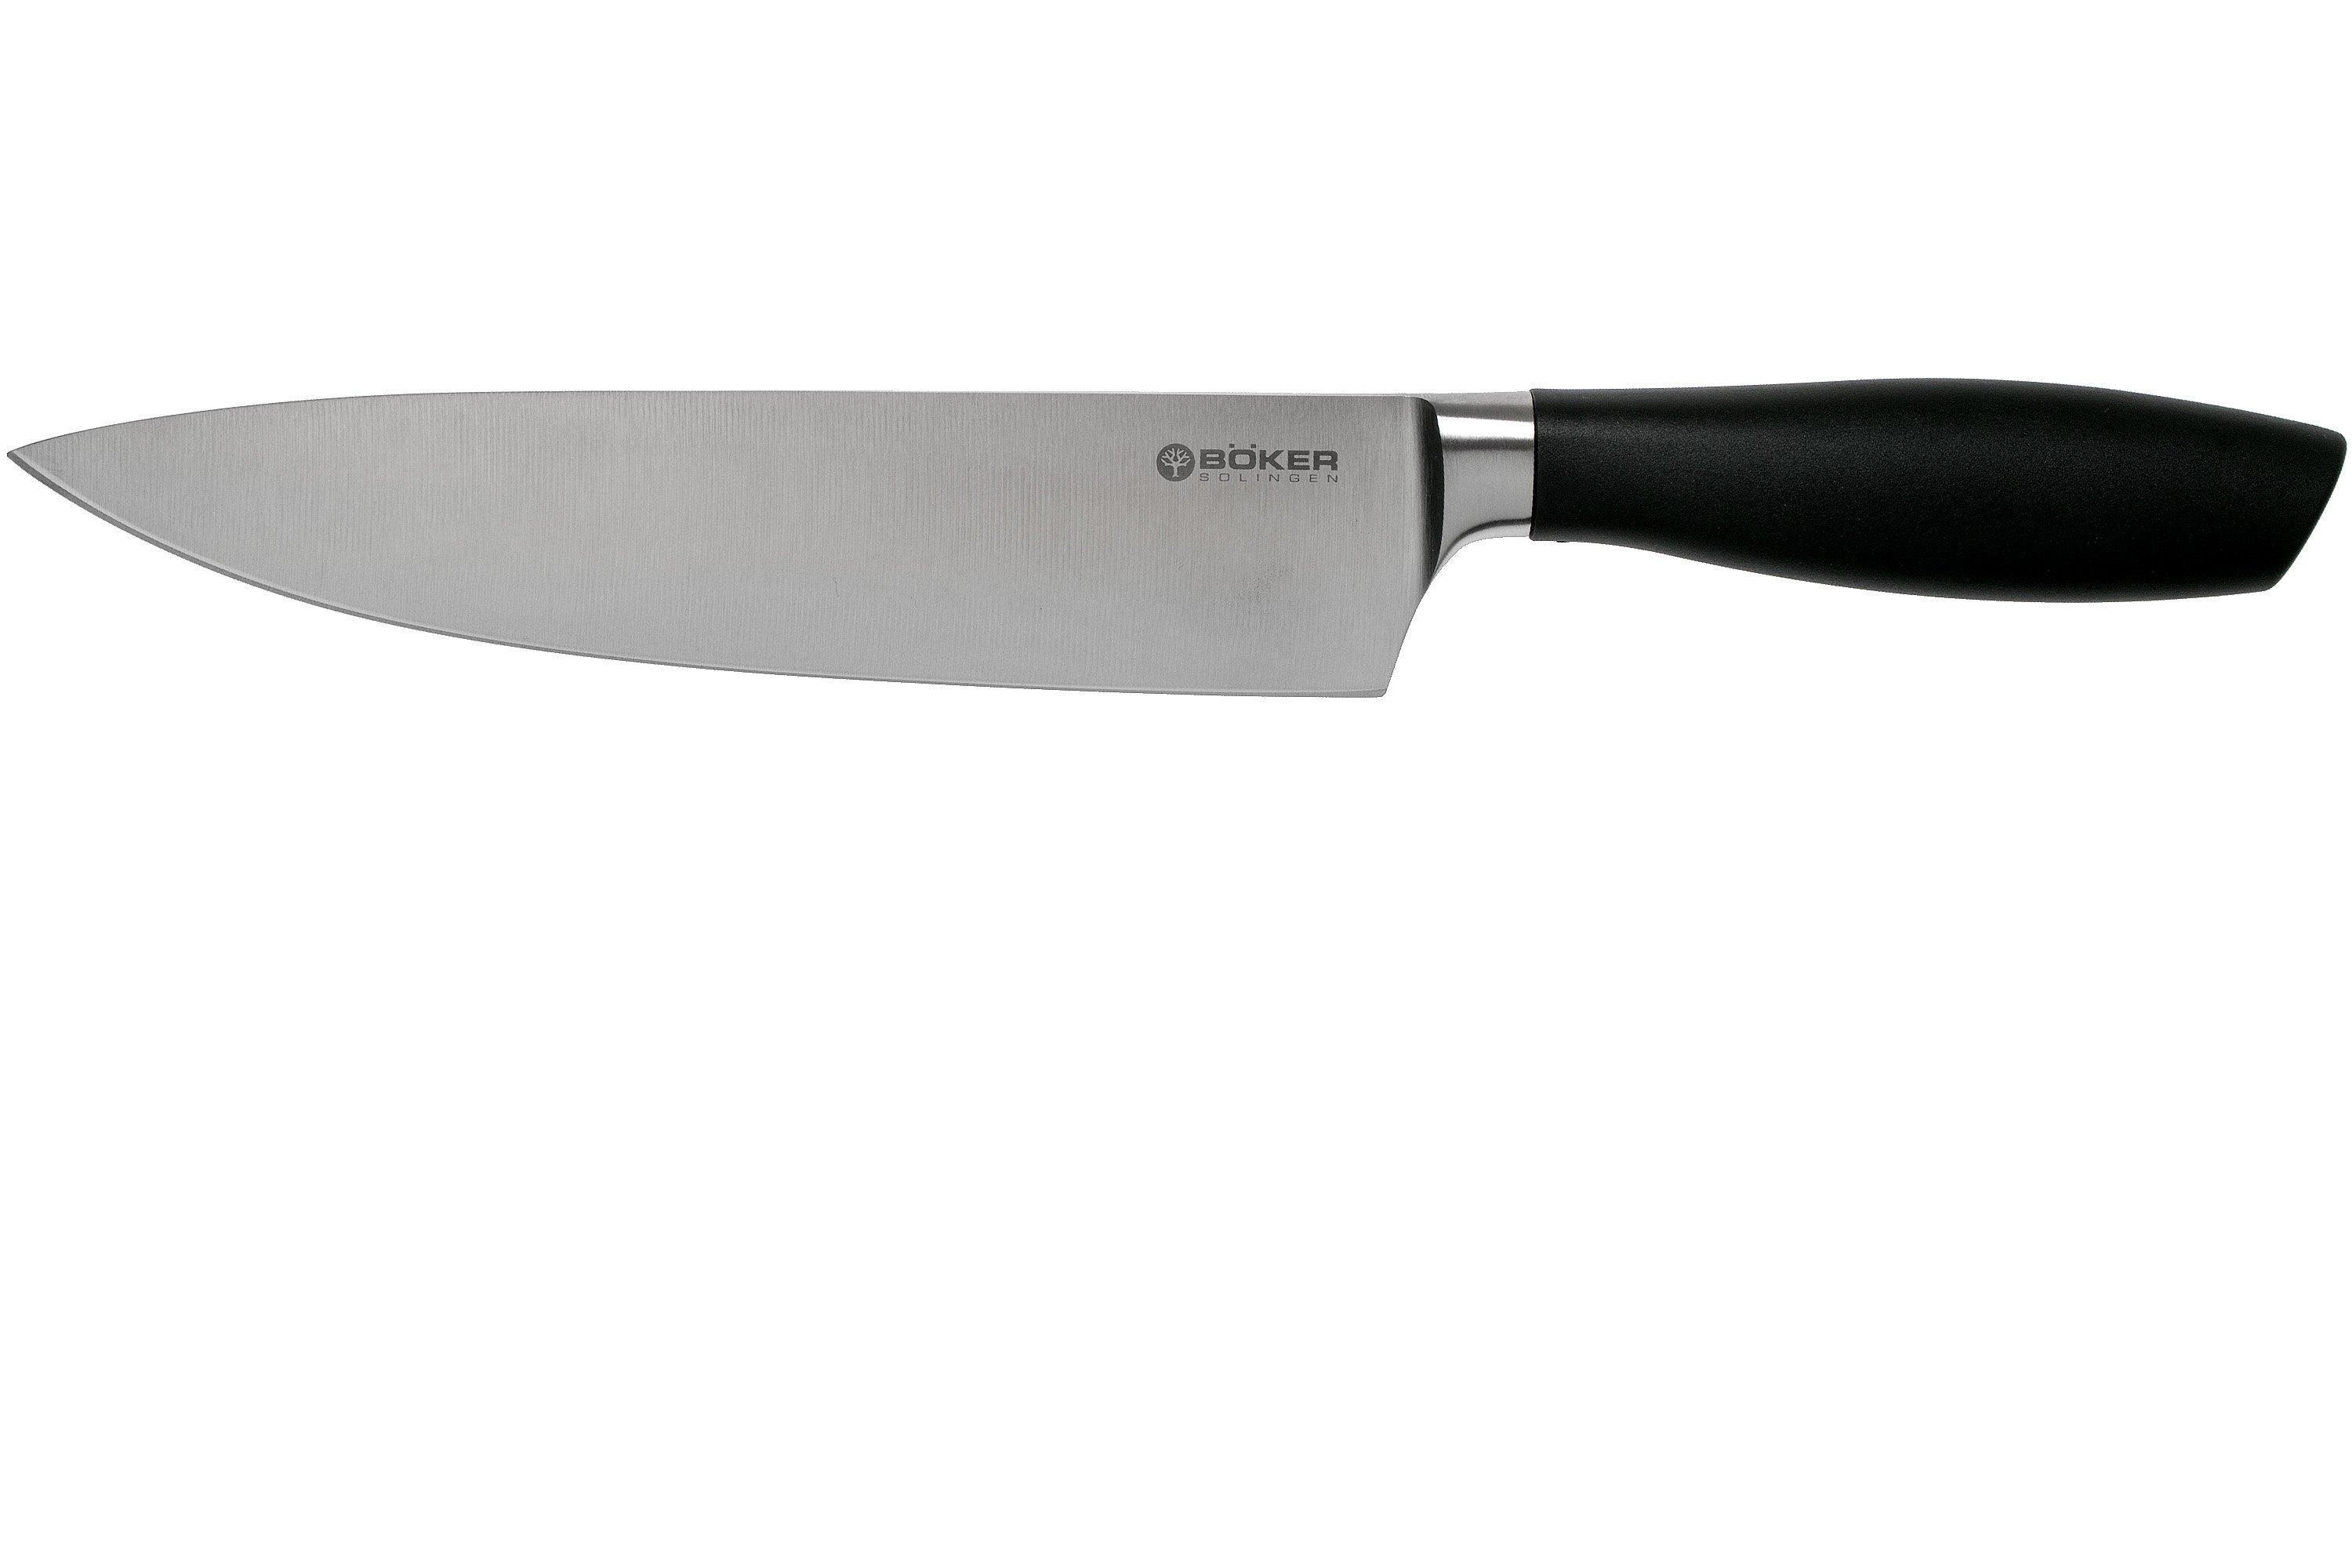 Böker Core Professional chef's knife 16 cm - 130820